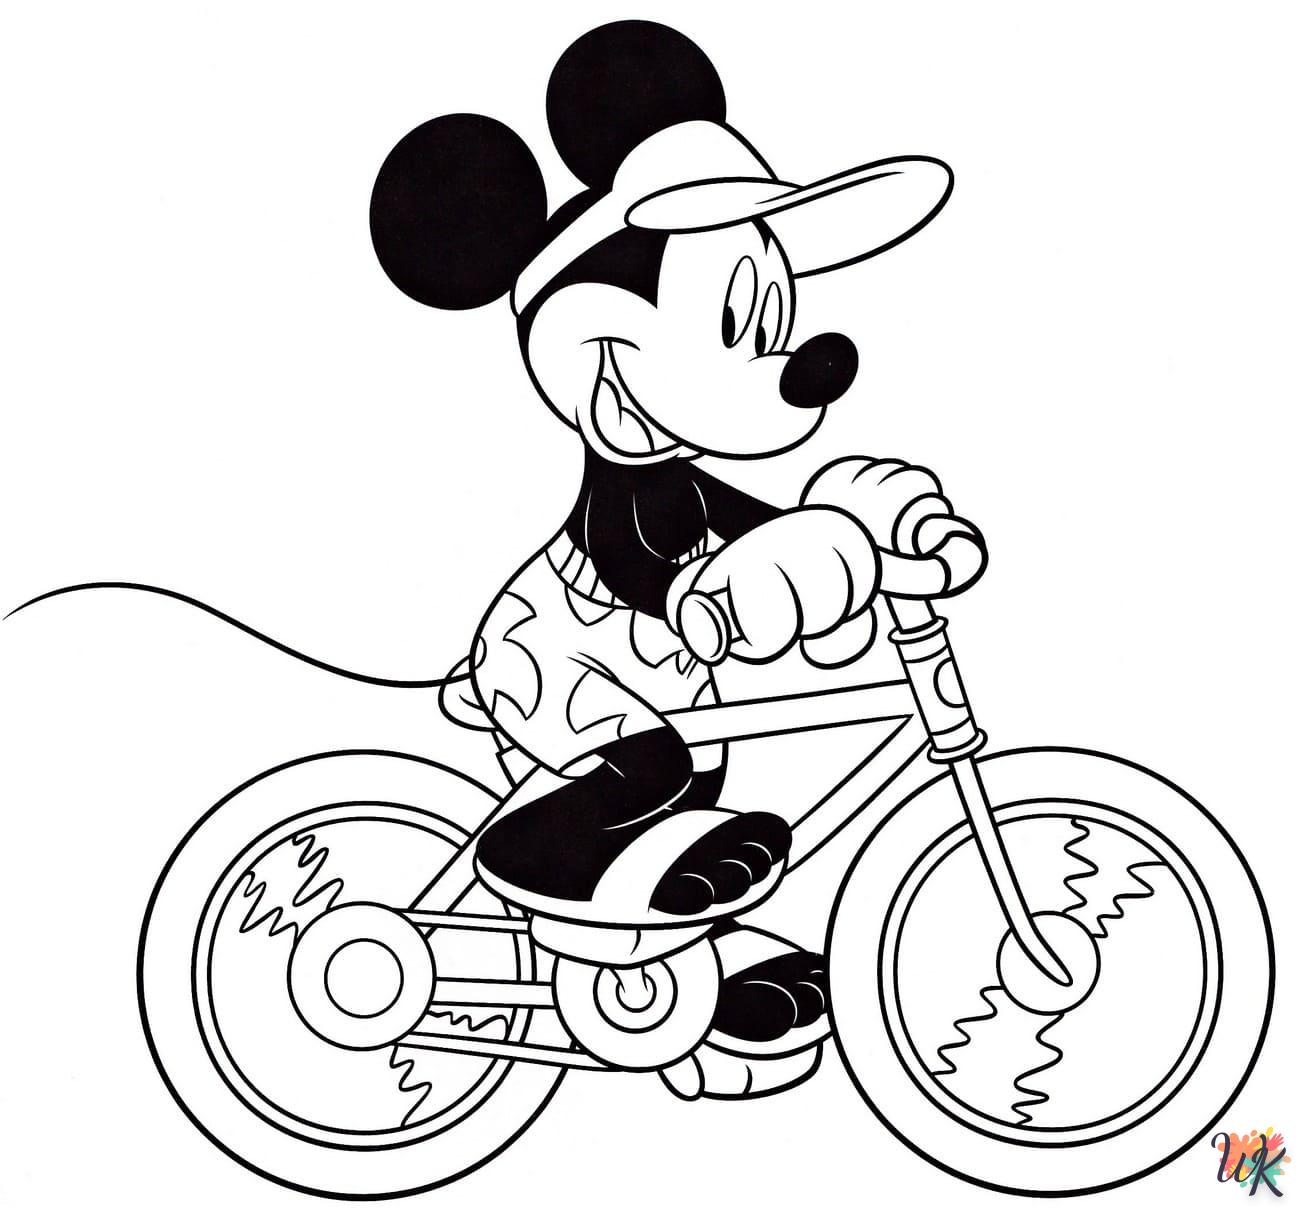 Kleurplaat Mickey Mouse53